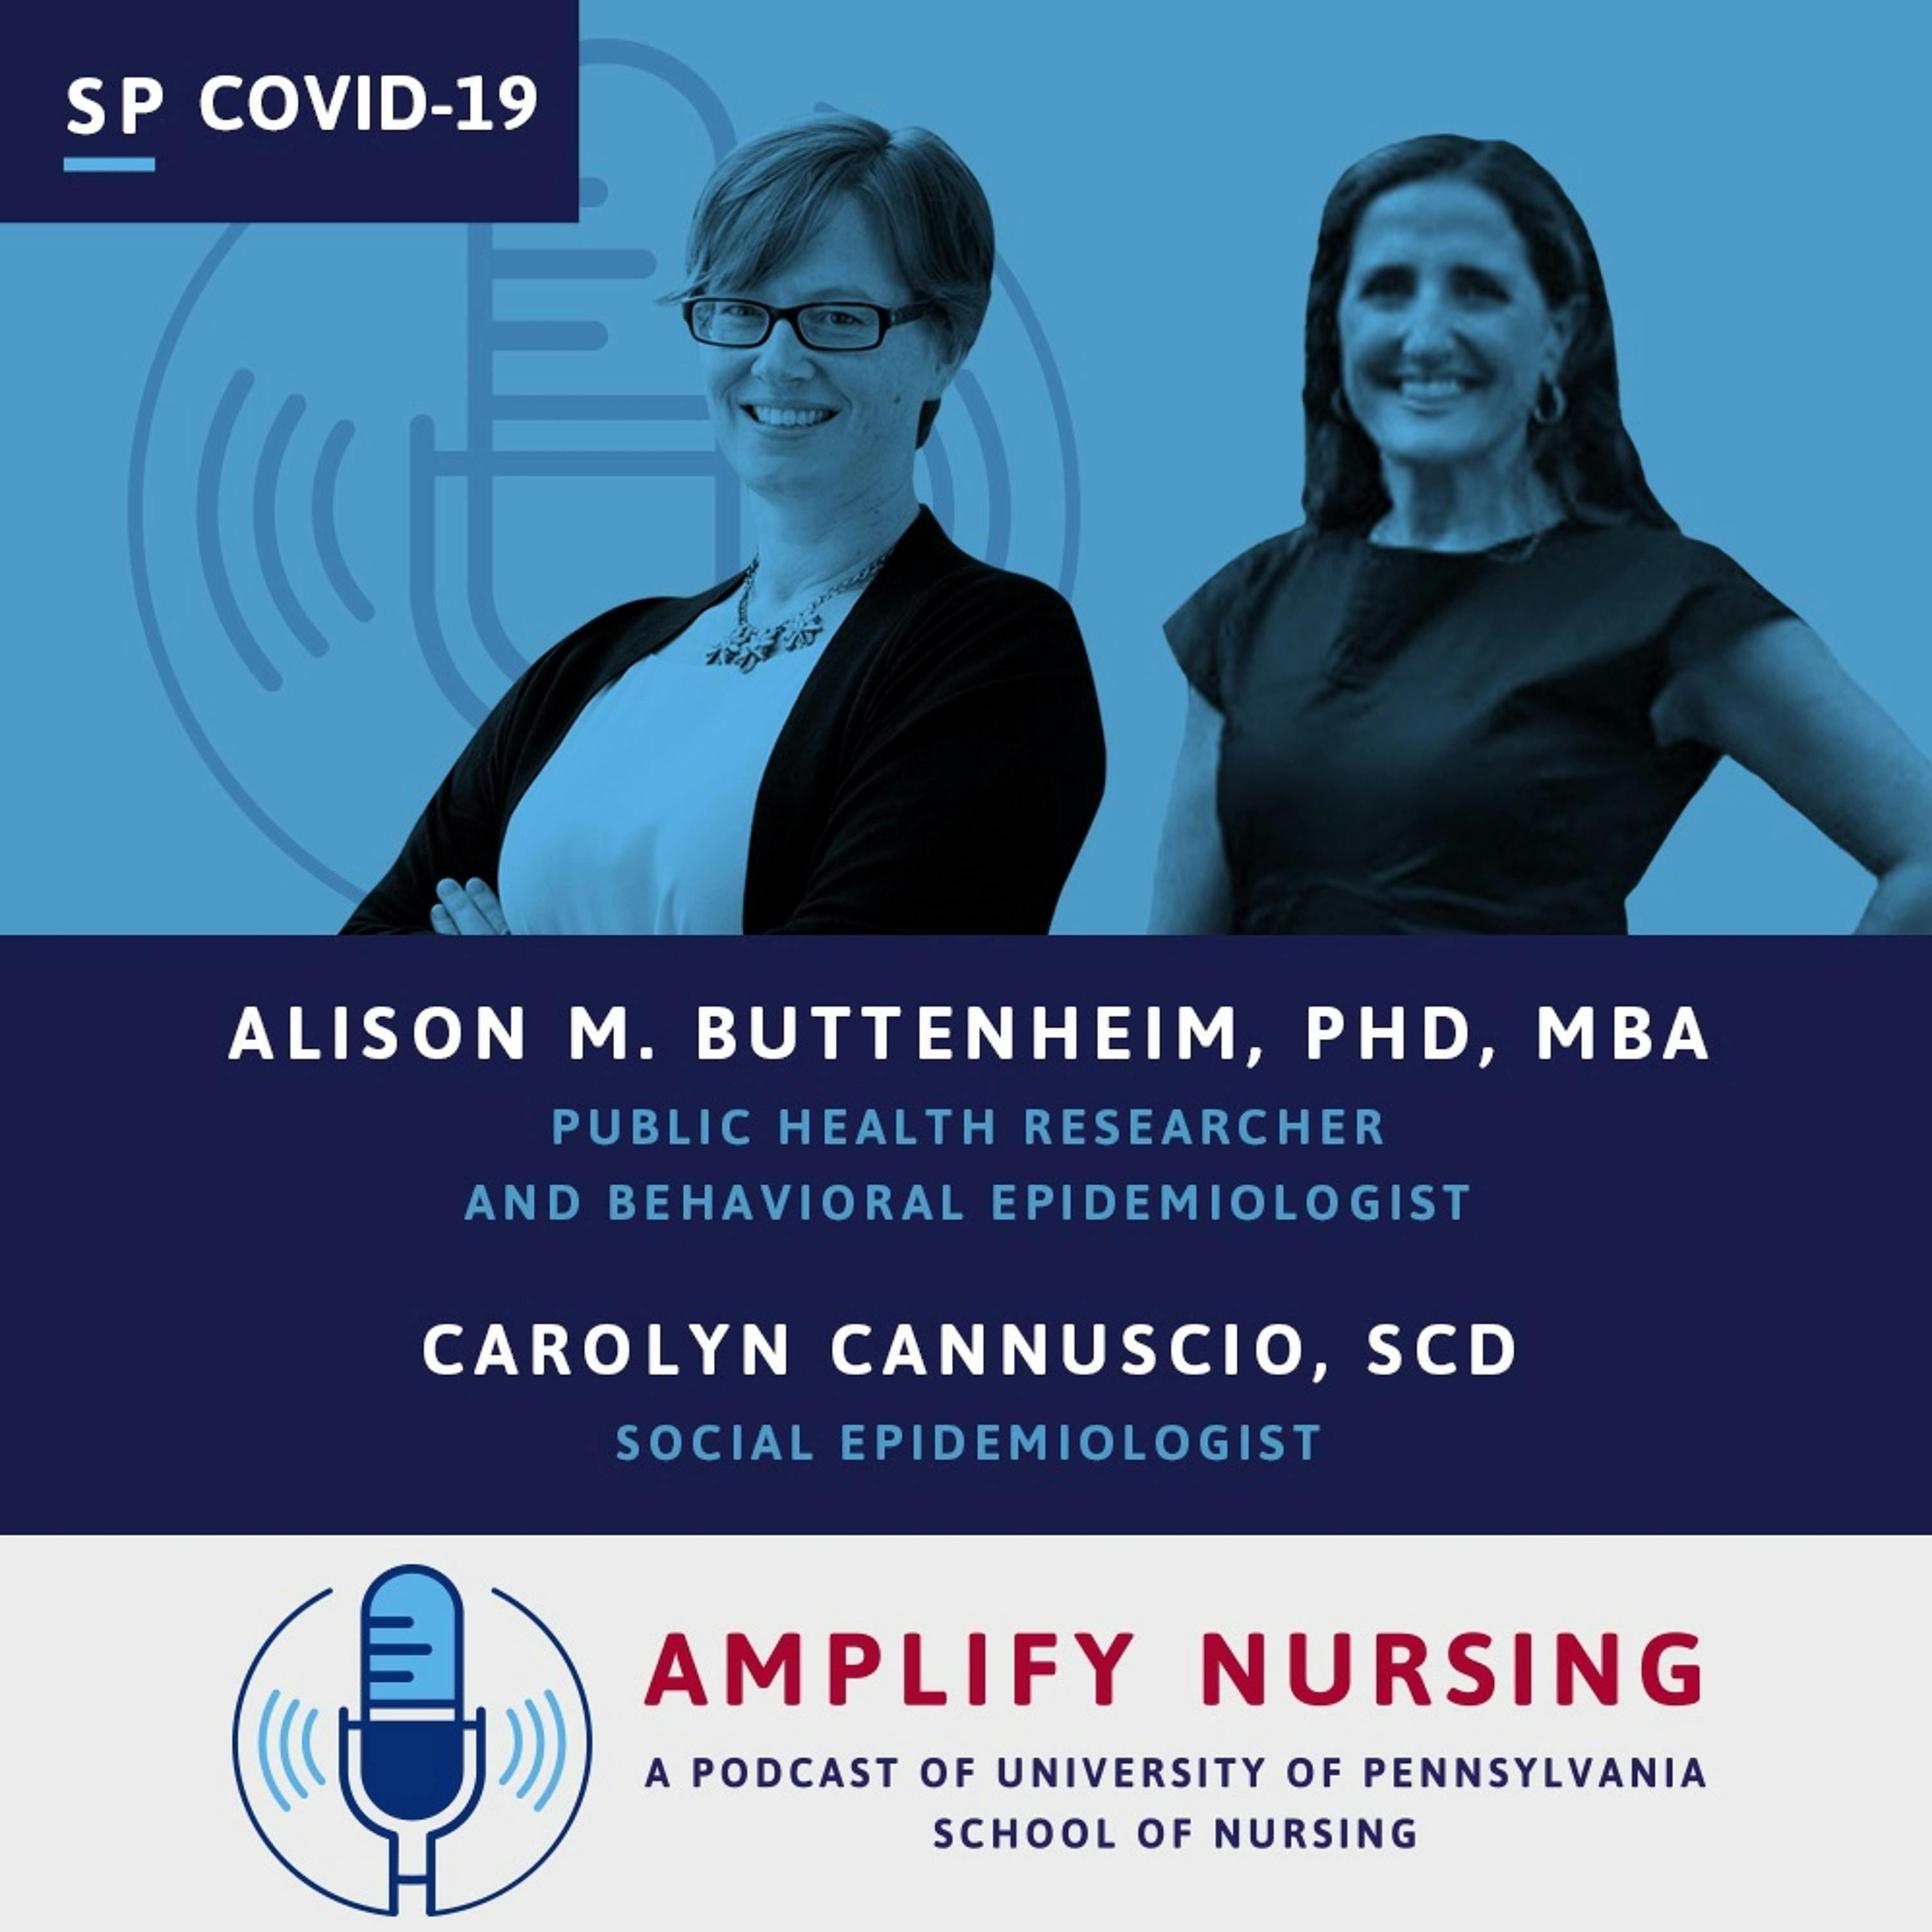 Amplify Nursing Special Episode: Coronavirus: Dr. Alison Buttenheim and Dr. Carolyn Cannuscio